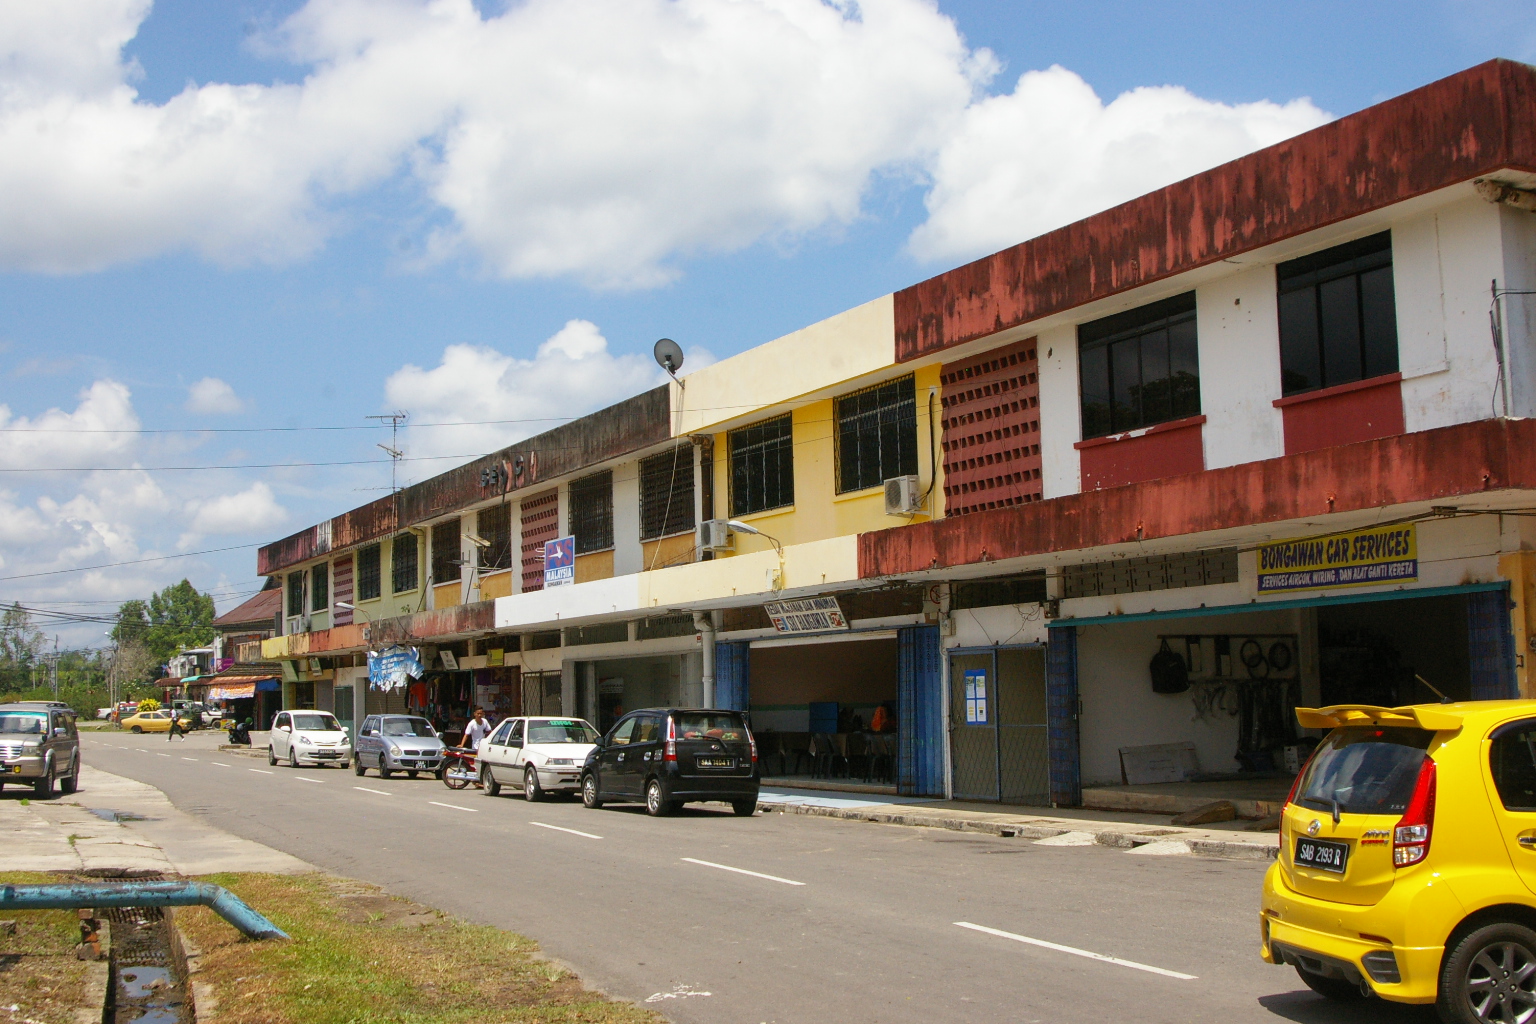 Shops near Bongawan Station, Bongawan town, West Coast Division, Malaysia April 30,2014